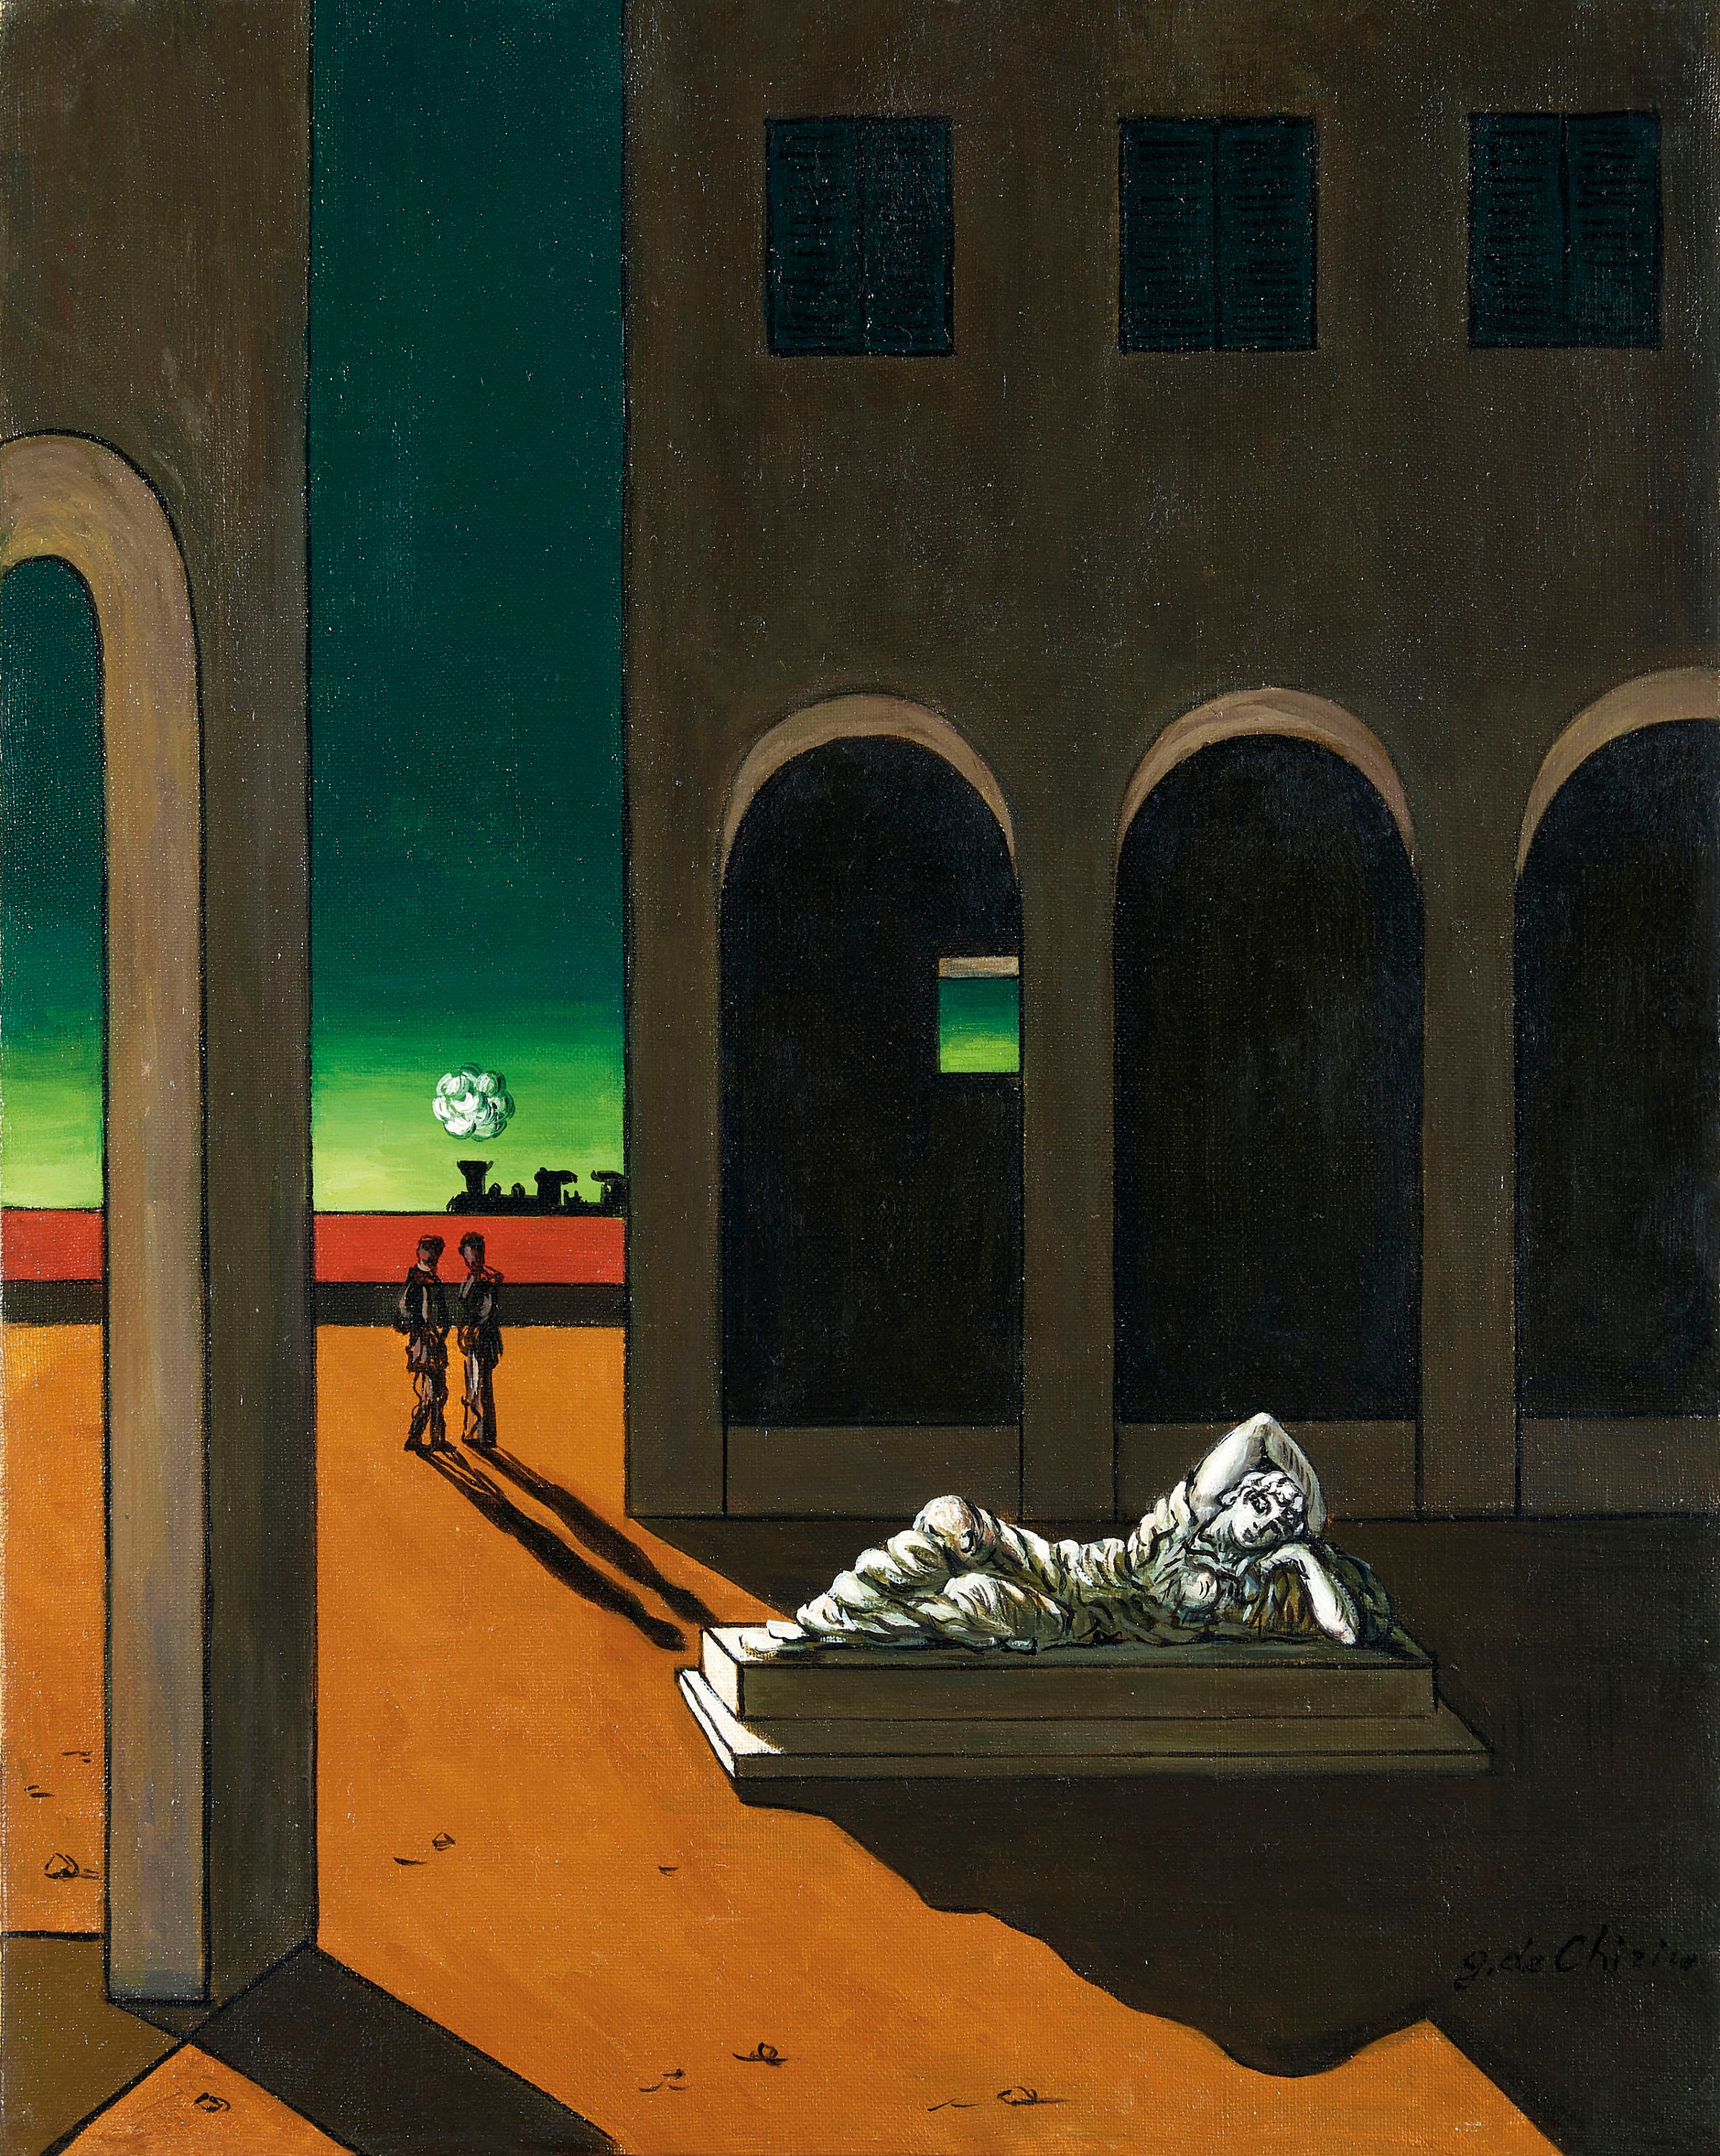 Giorgio De Chirico Poster, Canvas Painting Poster